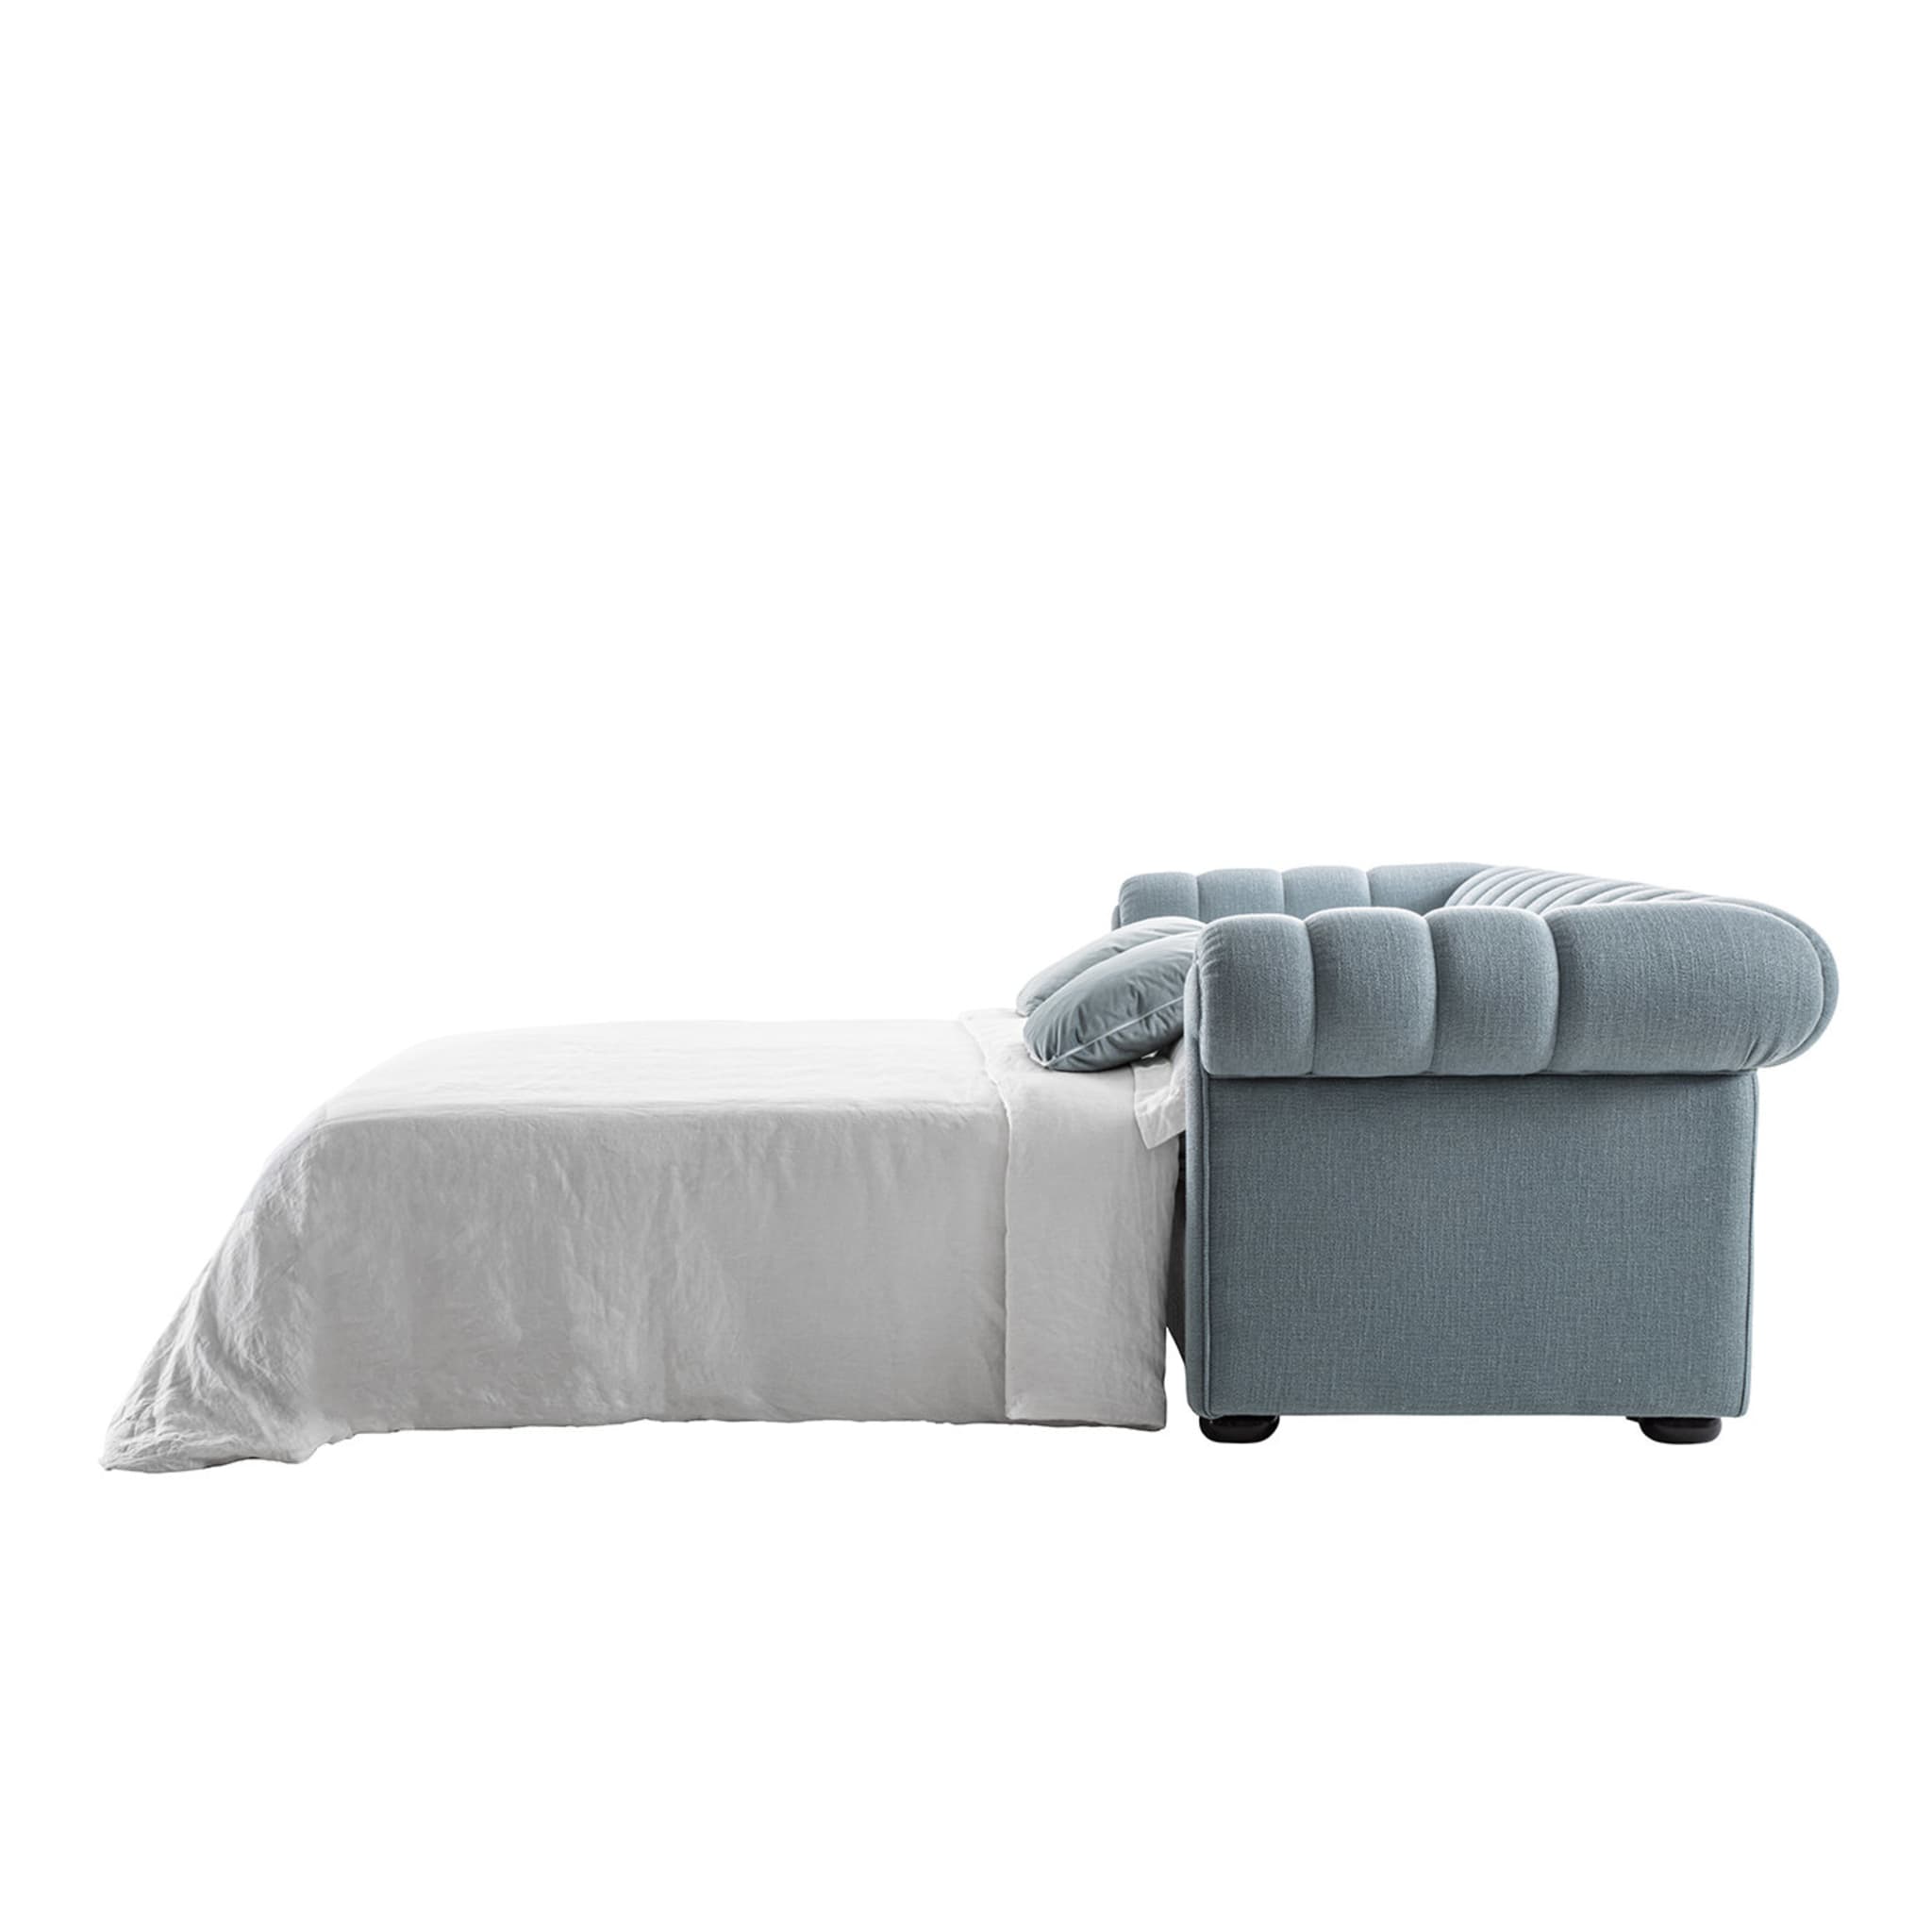 Giorgio sofa bed - Alternative view 5